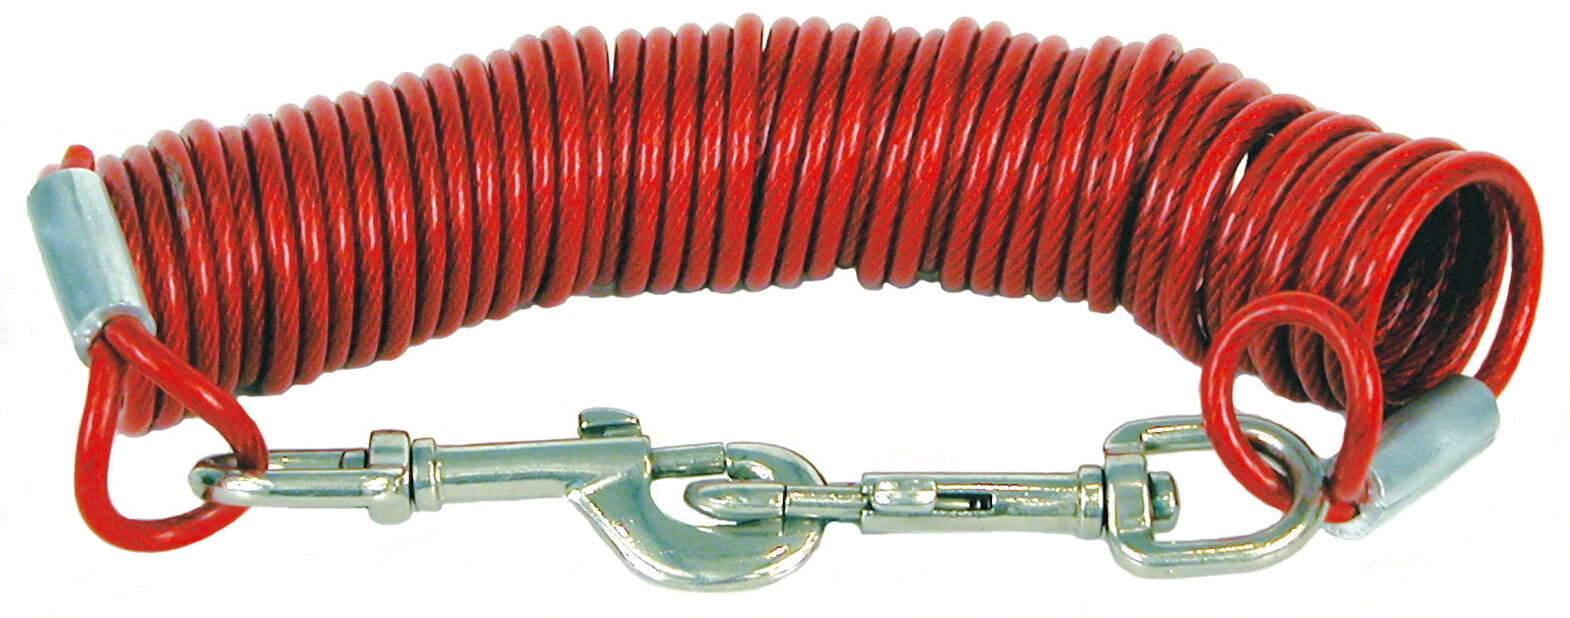 Dogman Løpeline, vinylkledd spiral 3m, Lengde 300 cm, Rød